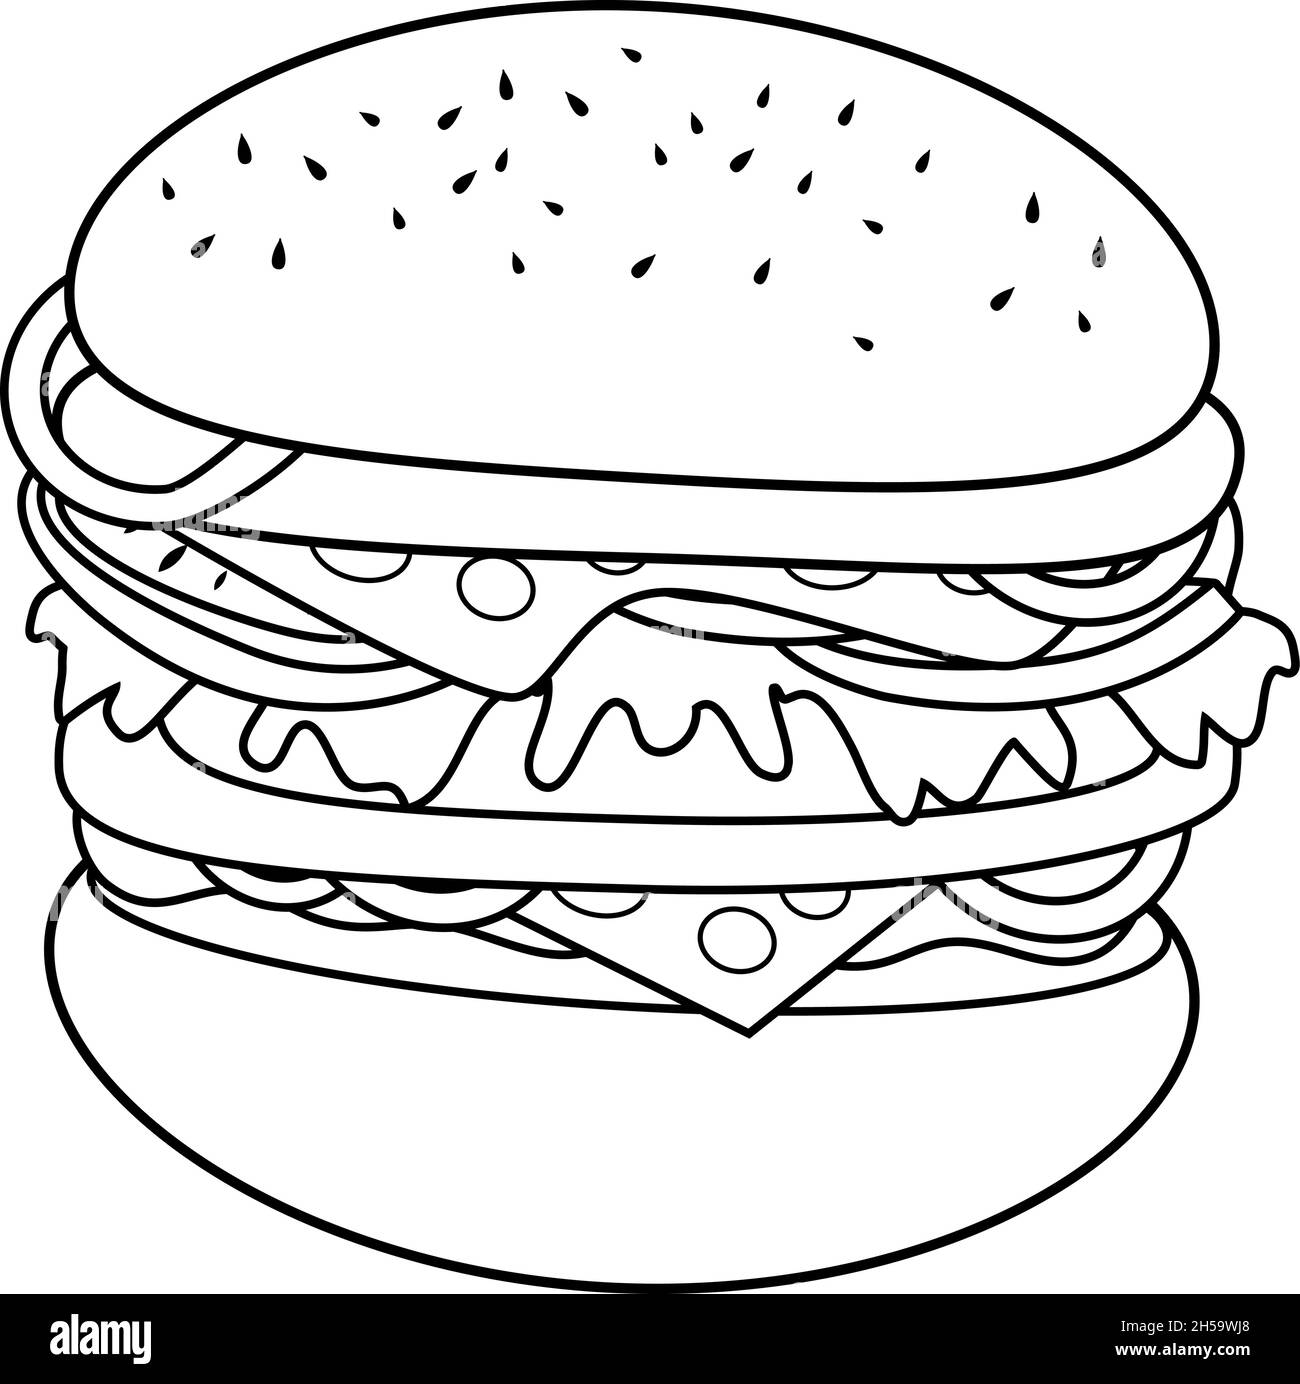 Hamburger vector illustration. Coloring book page Stock Vector ...